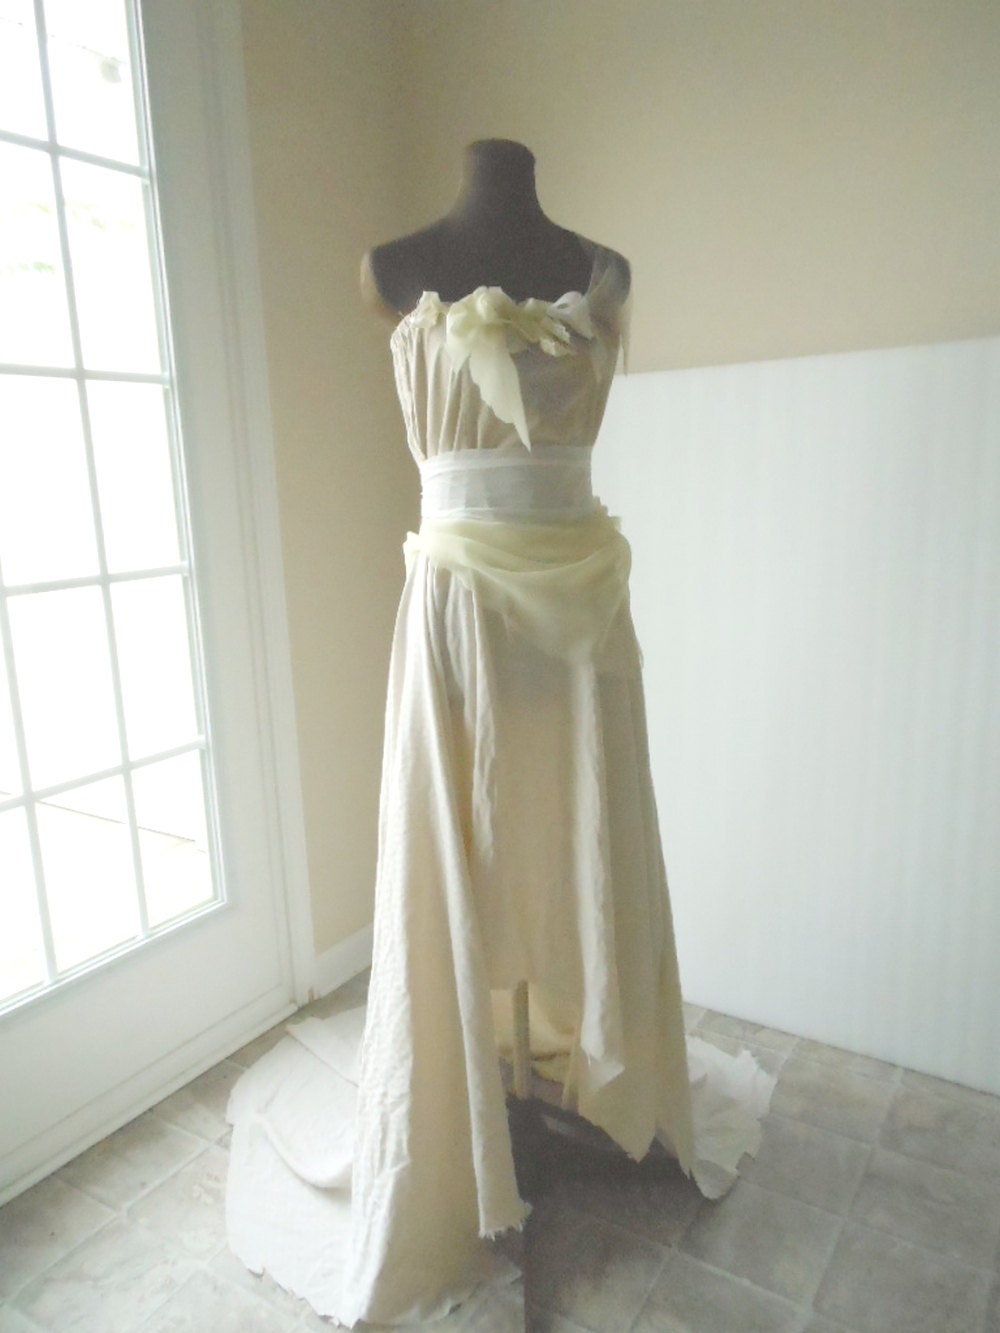 Bohemian Ecru Wedding Gown Ballgown Romantic Tattered Shabby Chic Dress Mrs Darcy Ivory Alternative Wedding Creme Brulee Jane Austen